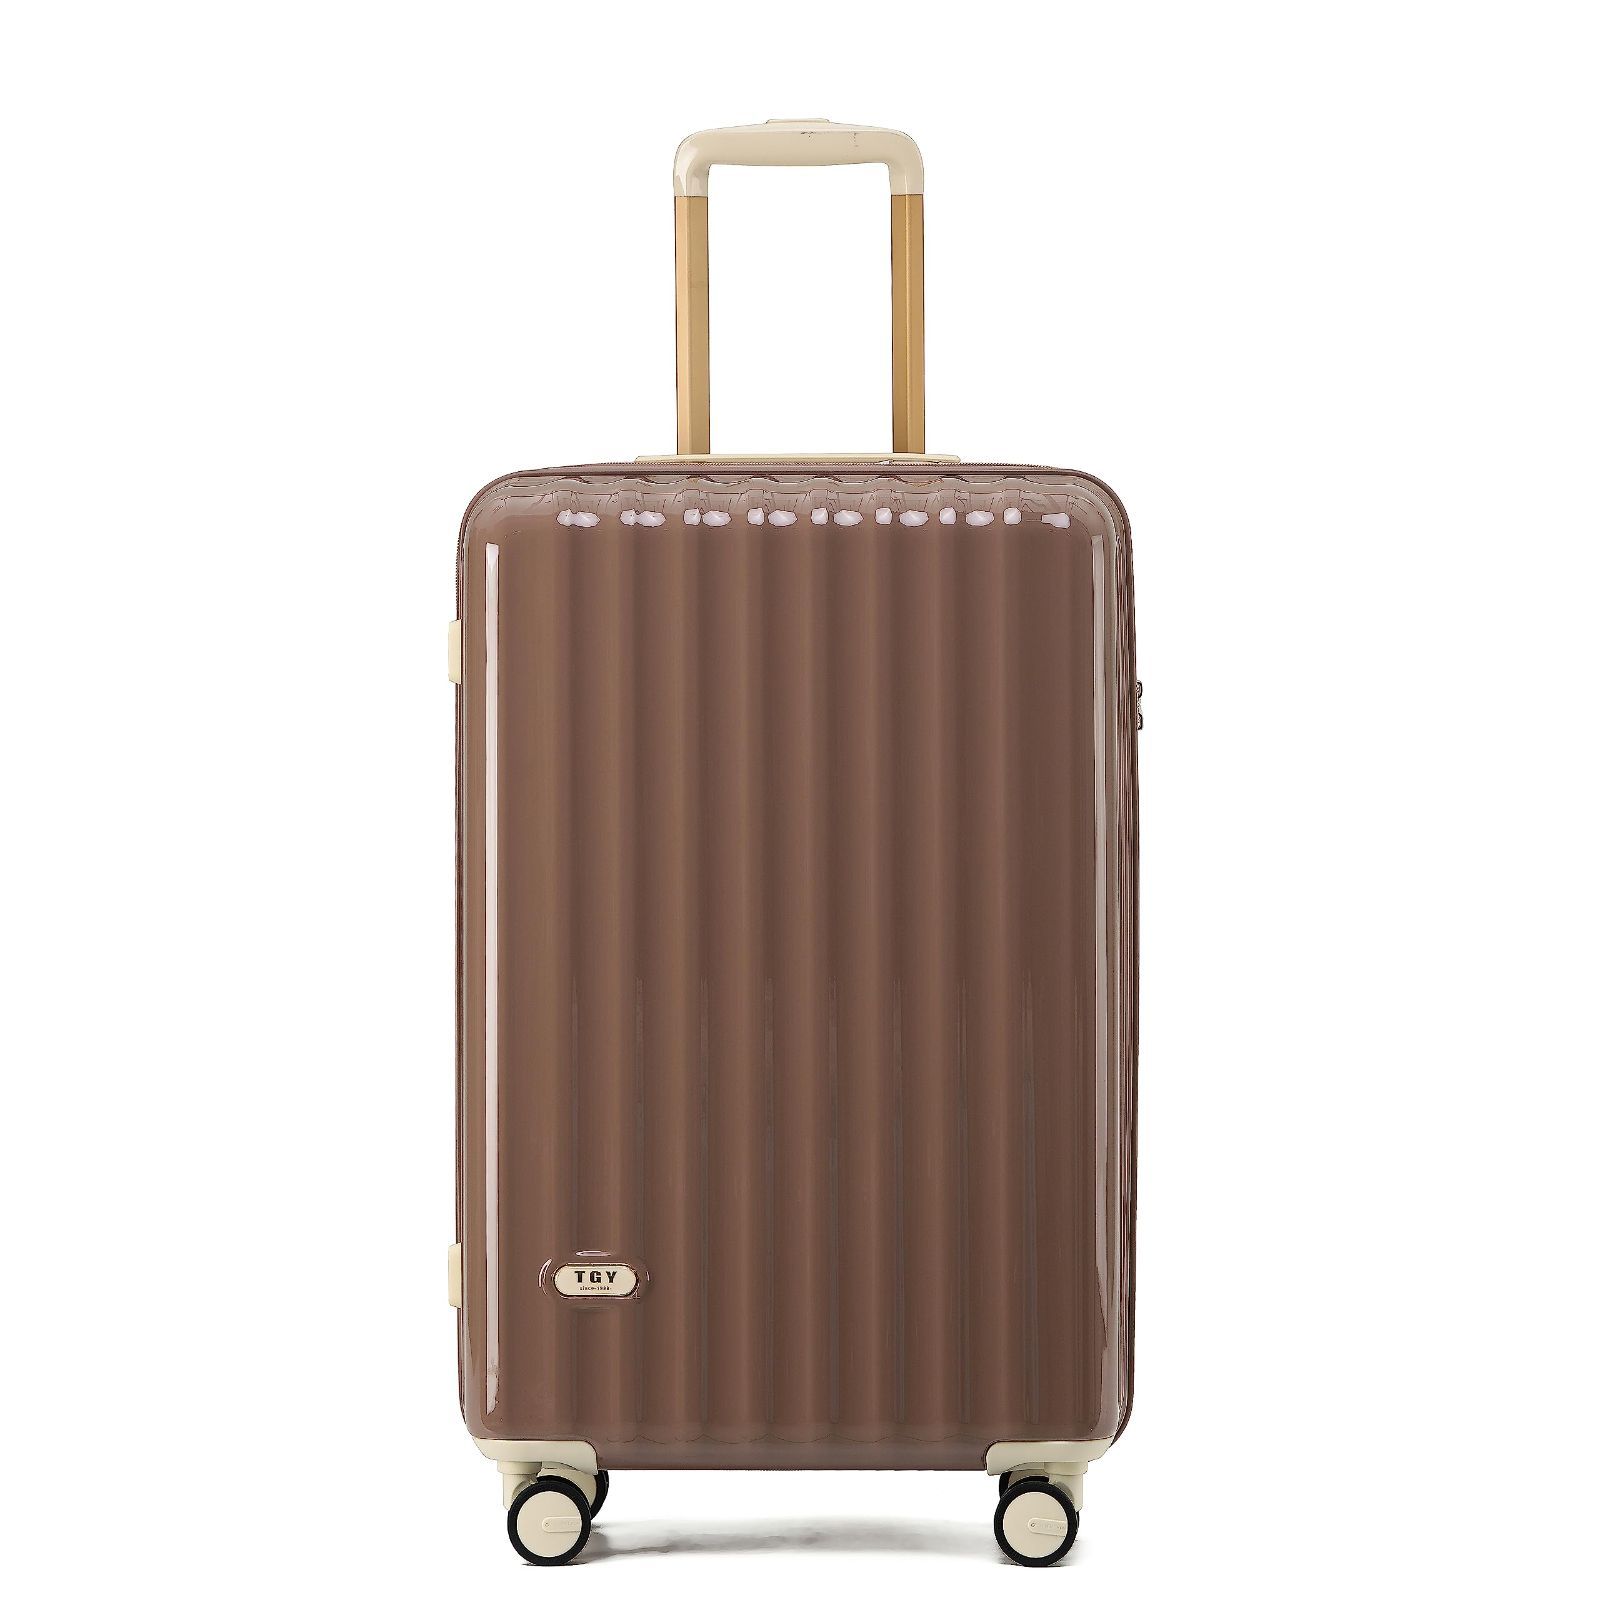 [GGQAAA] 新しい技術 第ニ代スーツケース キャリーケース ファスナーフレ